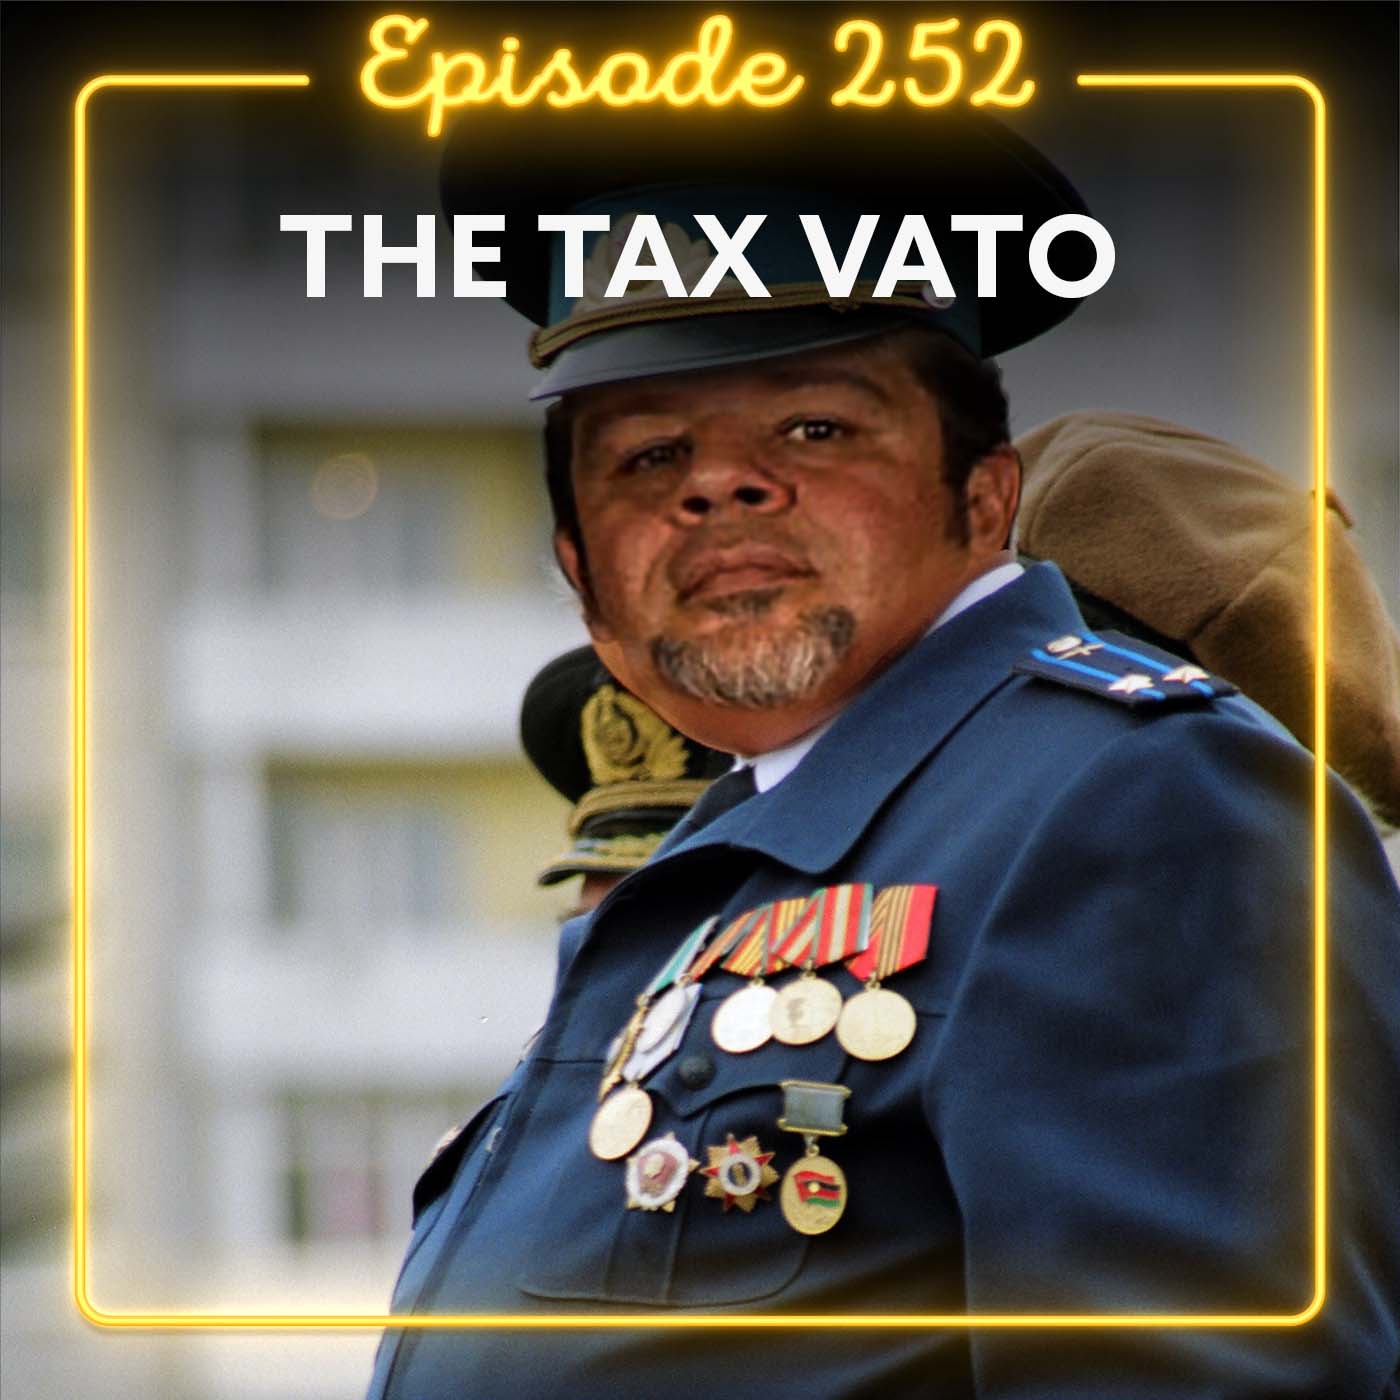 Episode 252 – The Tax Vato